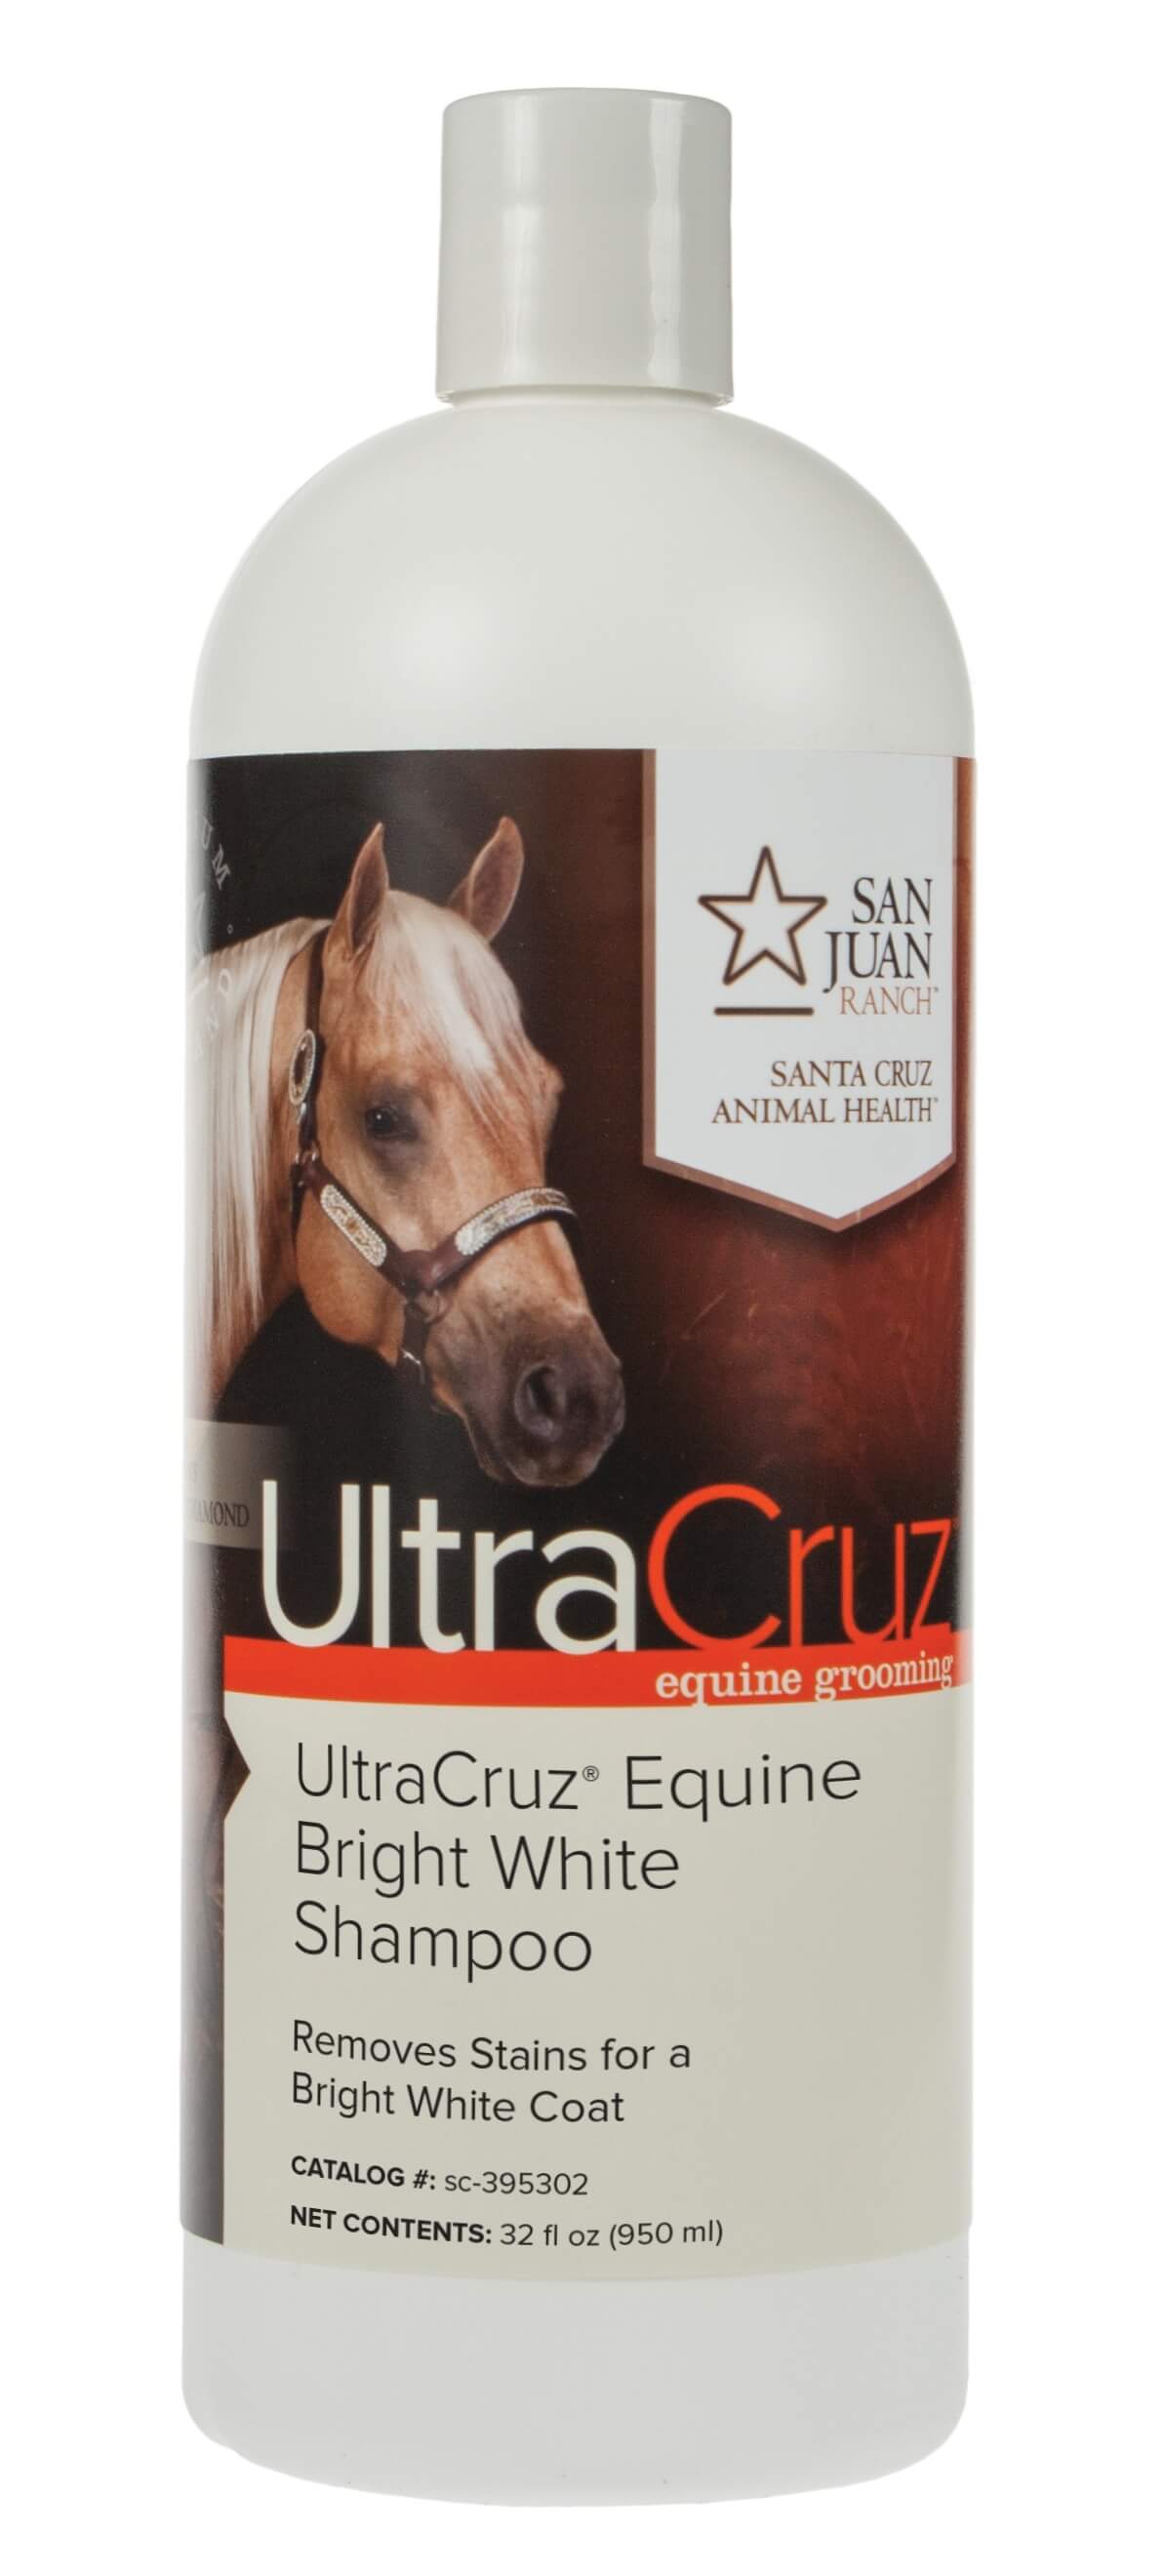 UltraCruz® Equine Bright White Shampoo for Horses